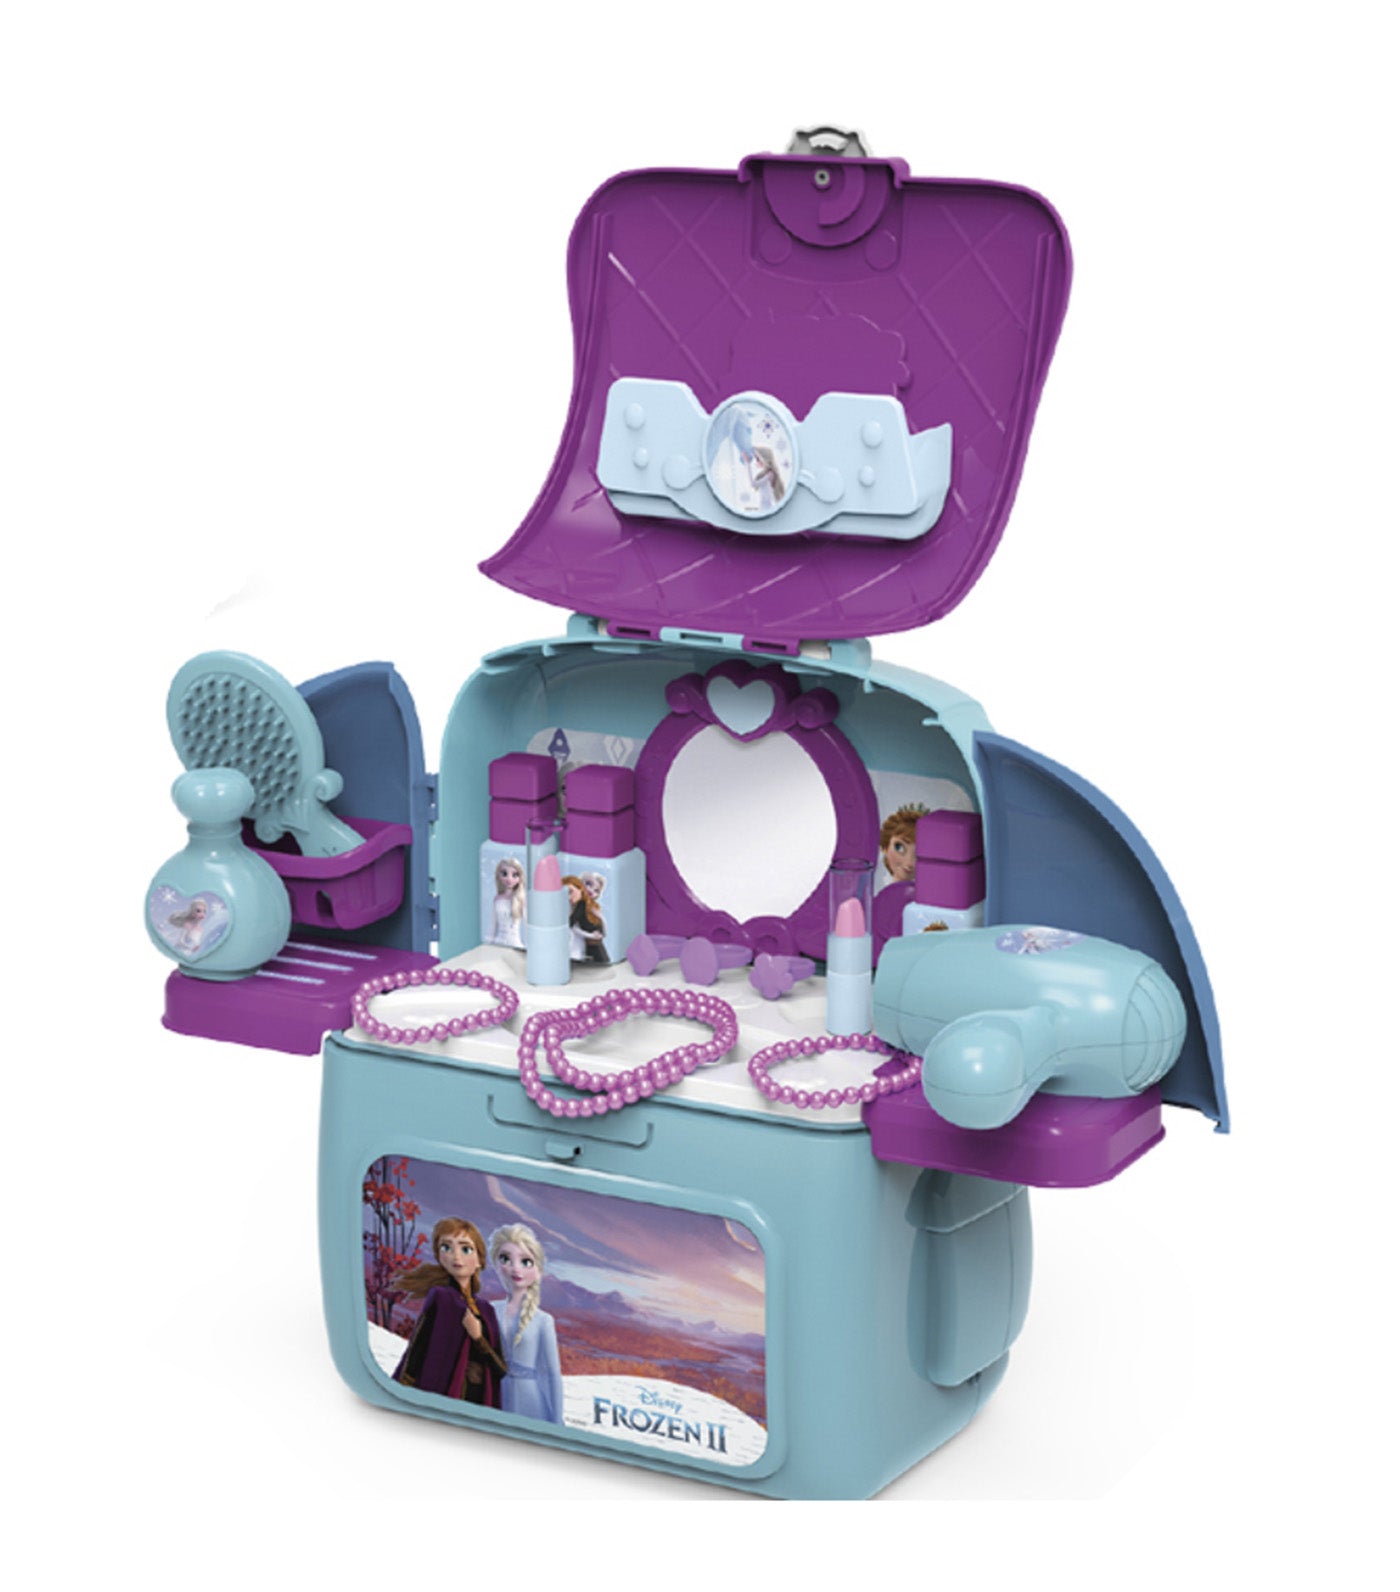 Disney Frozen - Elsa and Olaf's Ice Cream Cart Playset